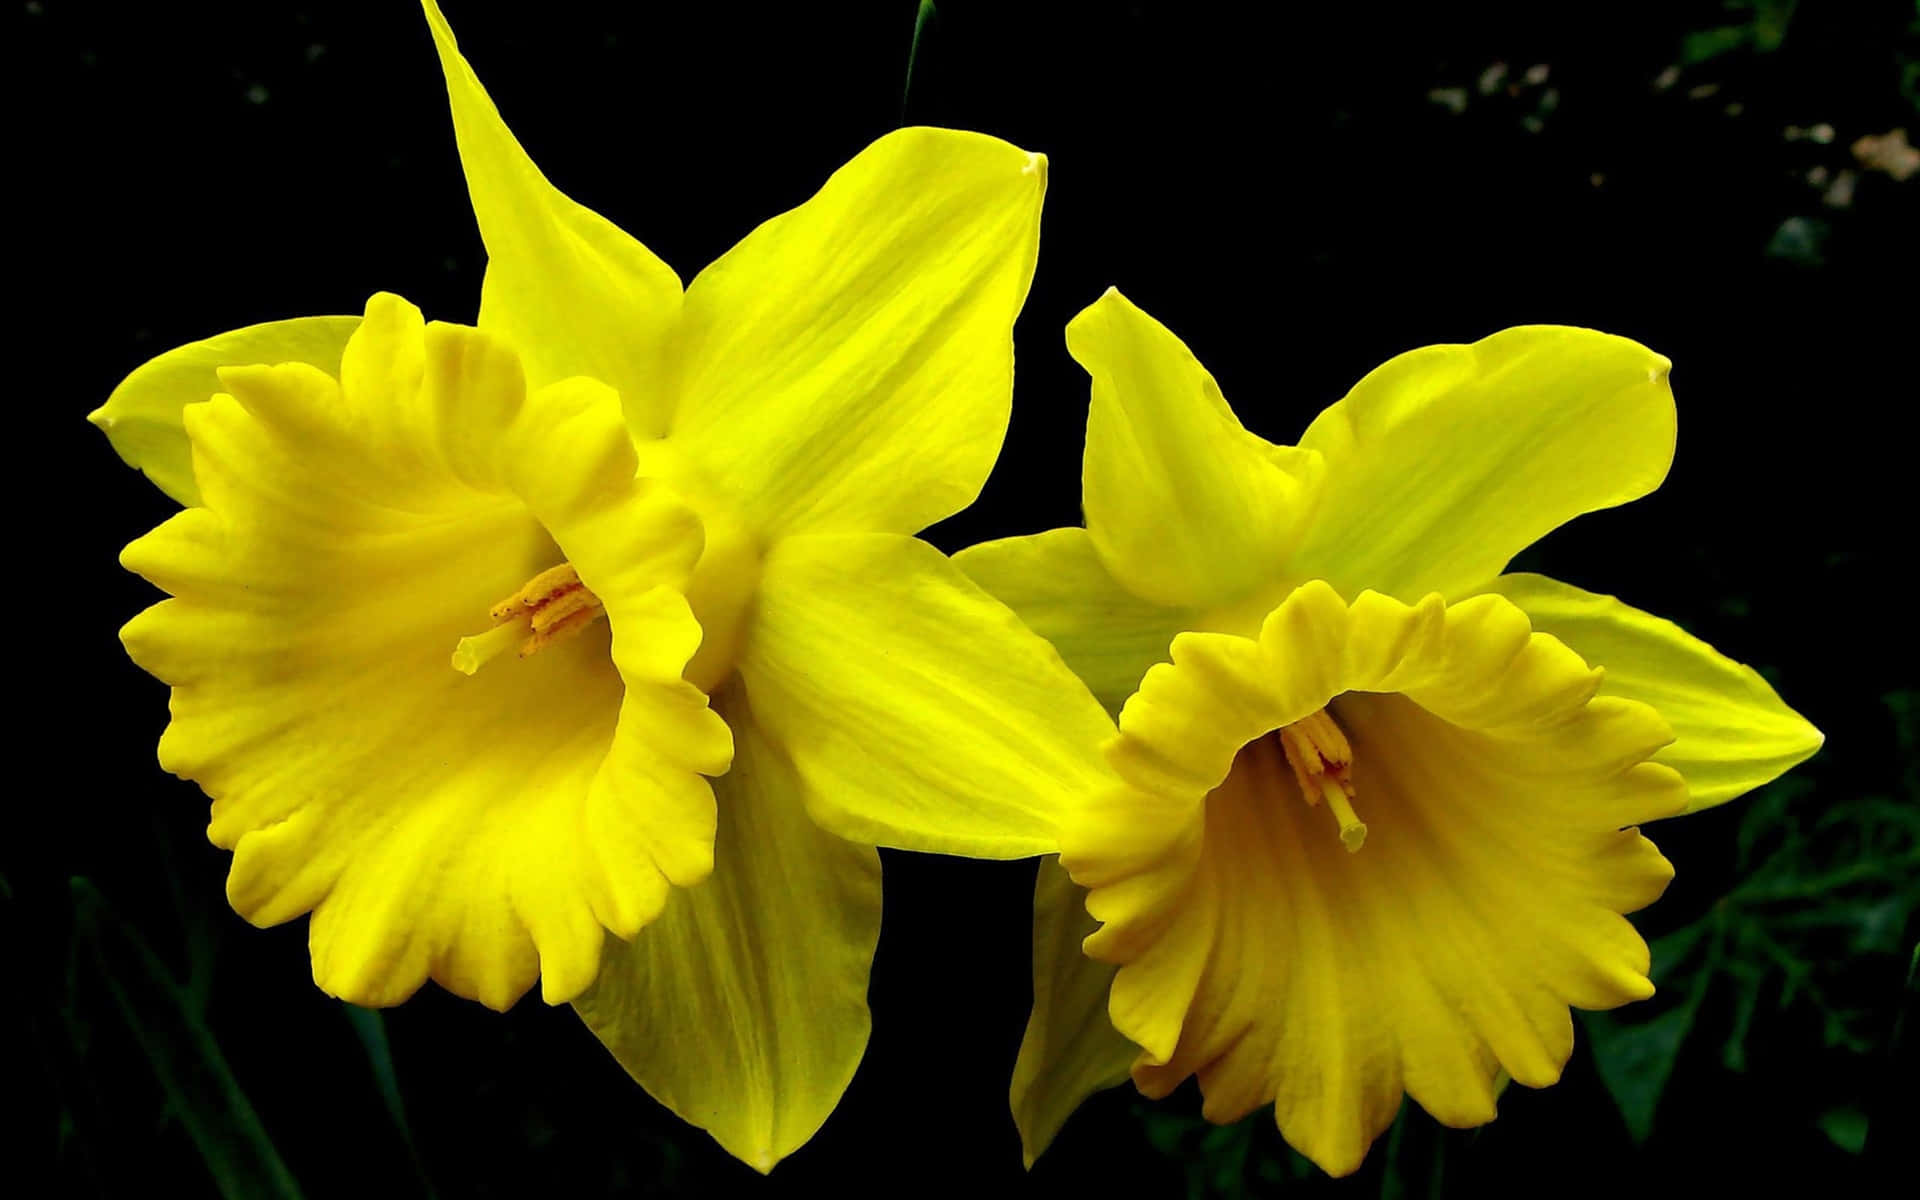 Radiant Yellow Daffodils in Full Bloom Wallpaper